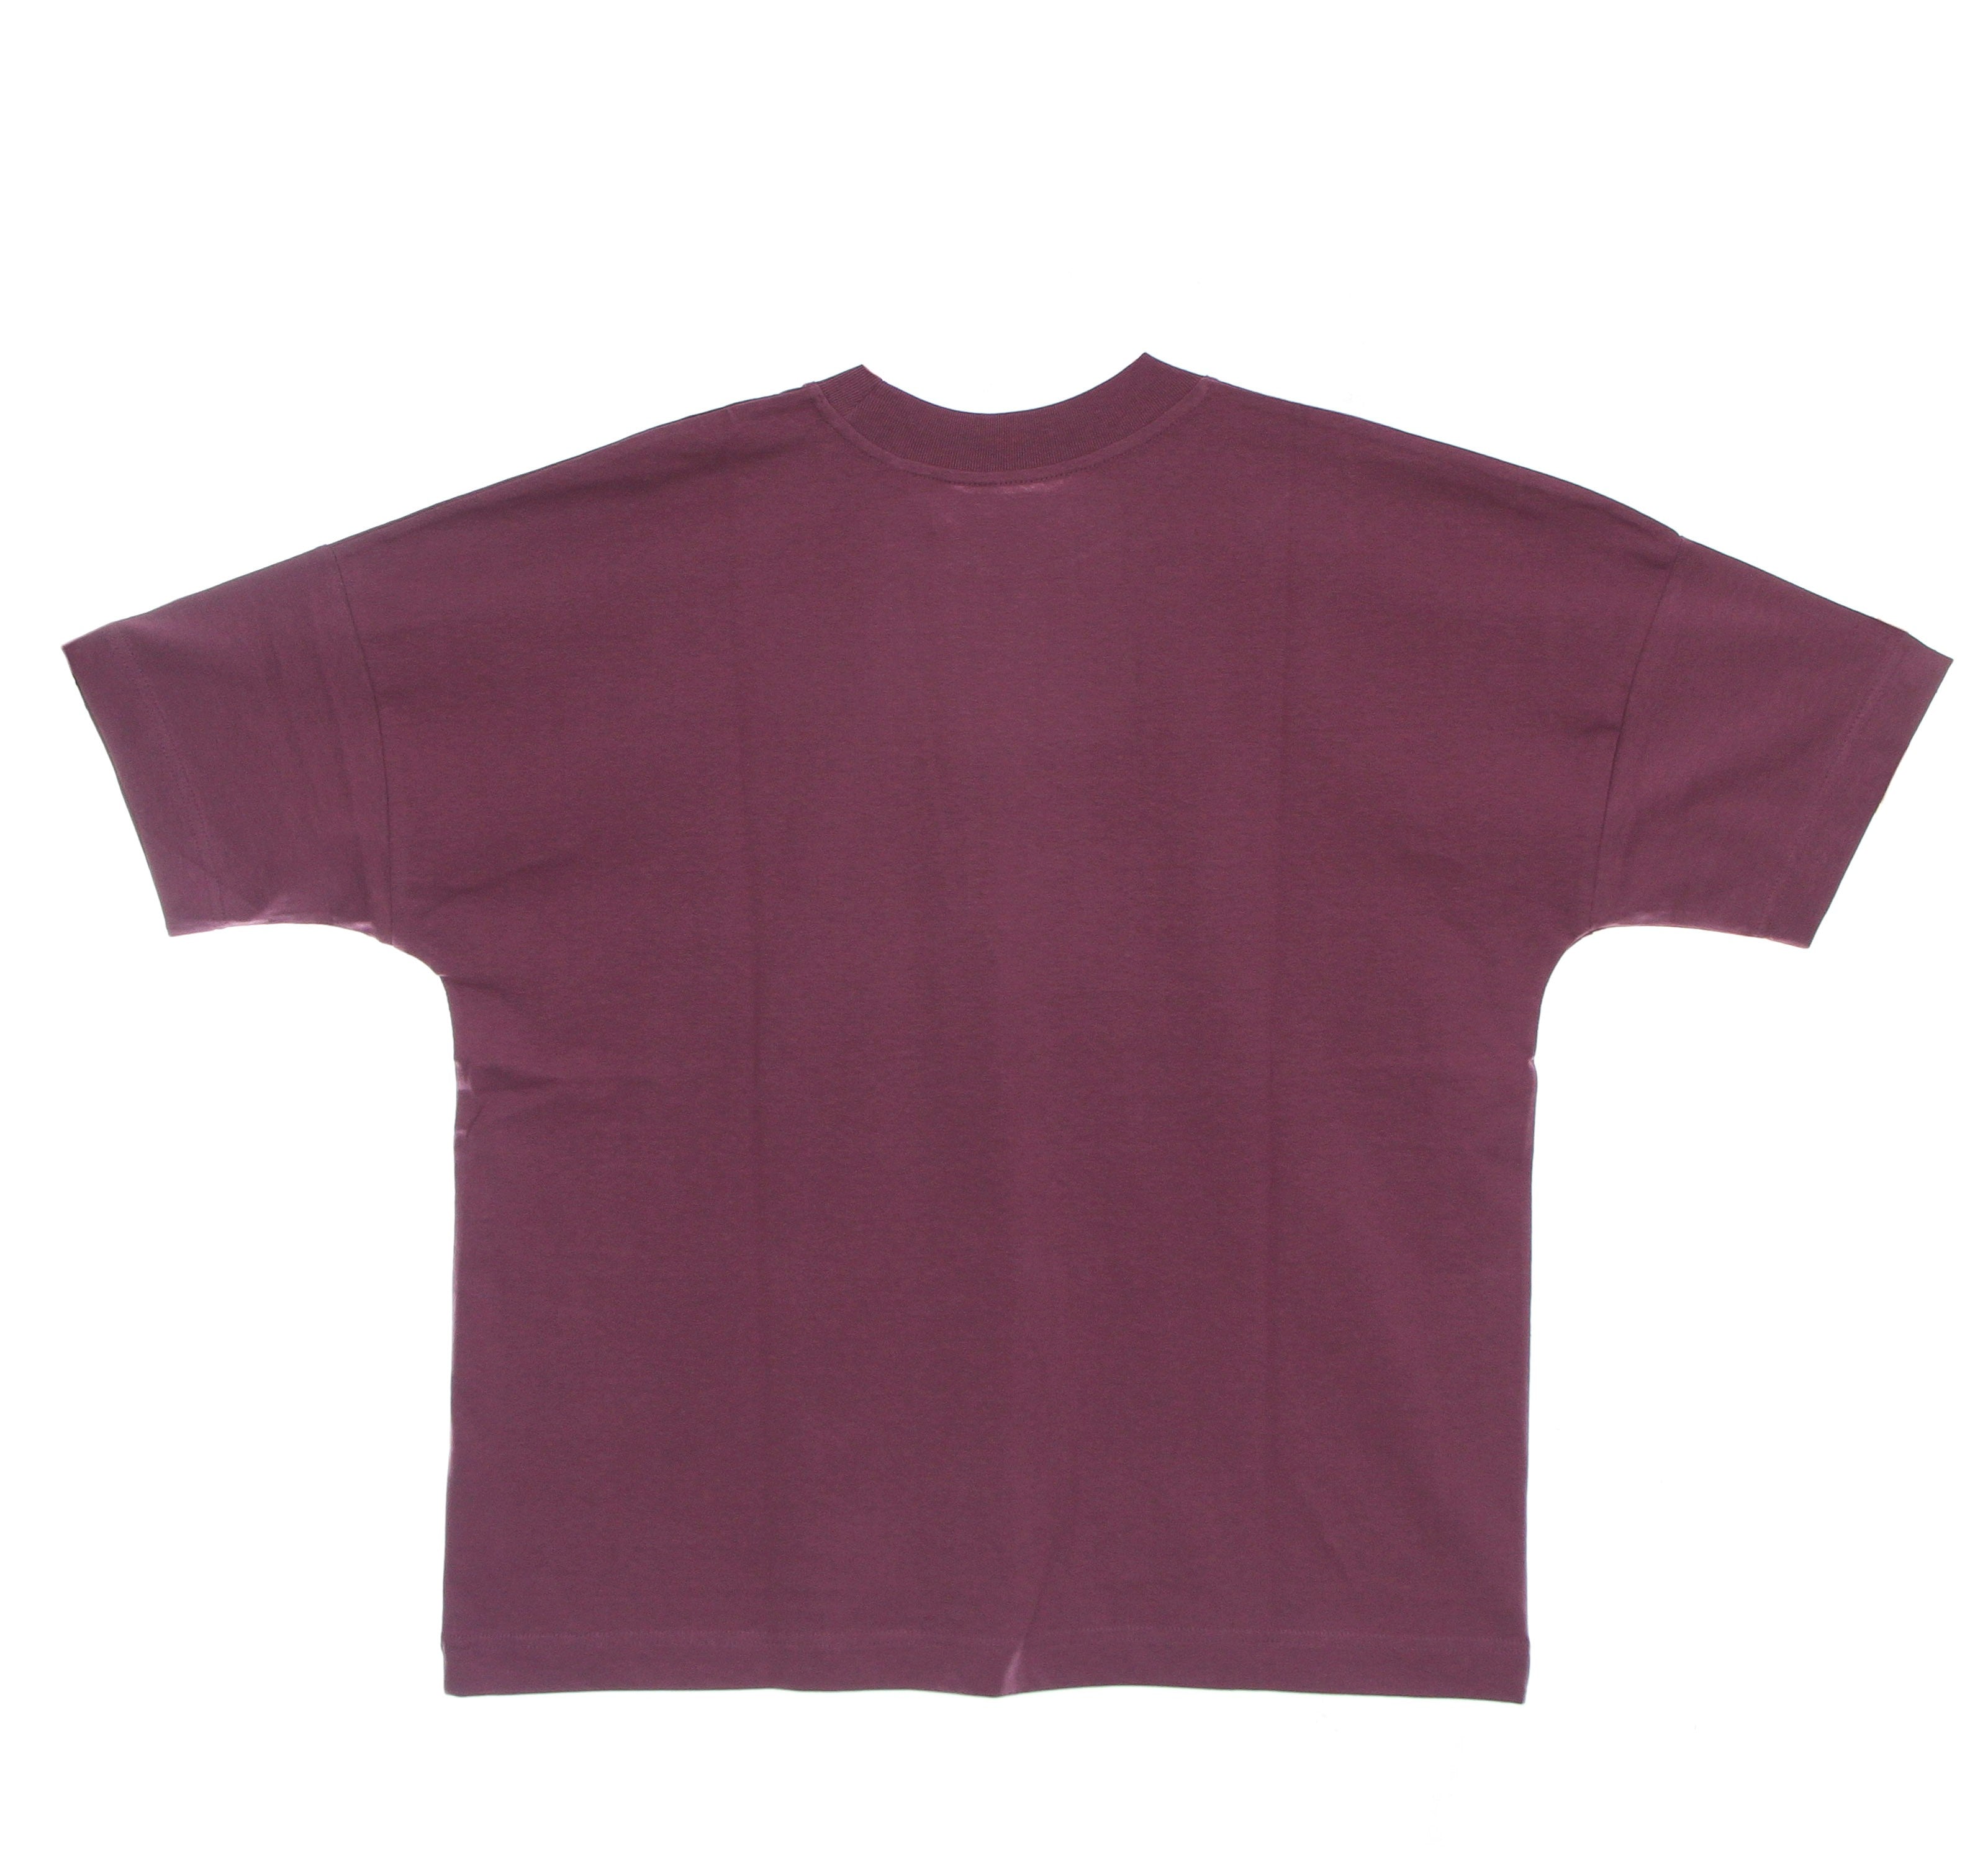 Inkover T3 Mauve Purple Men's T-Shirt